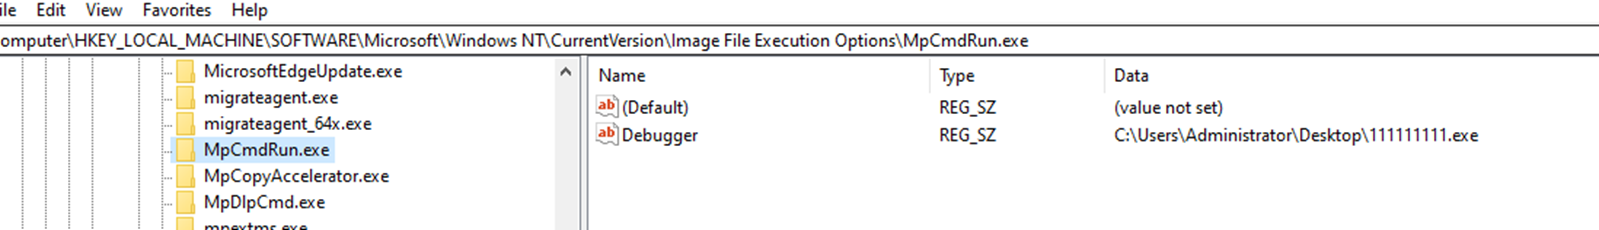 Figure 34. Debugger value in image file execution